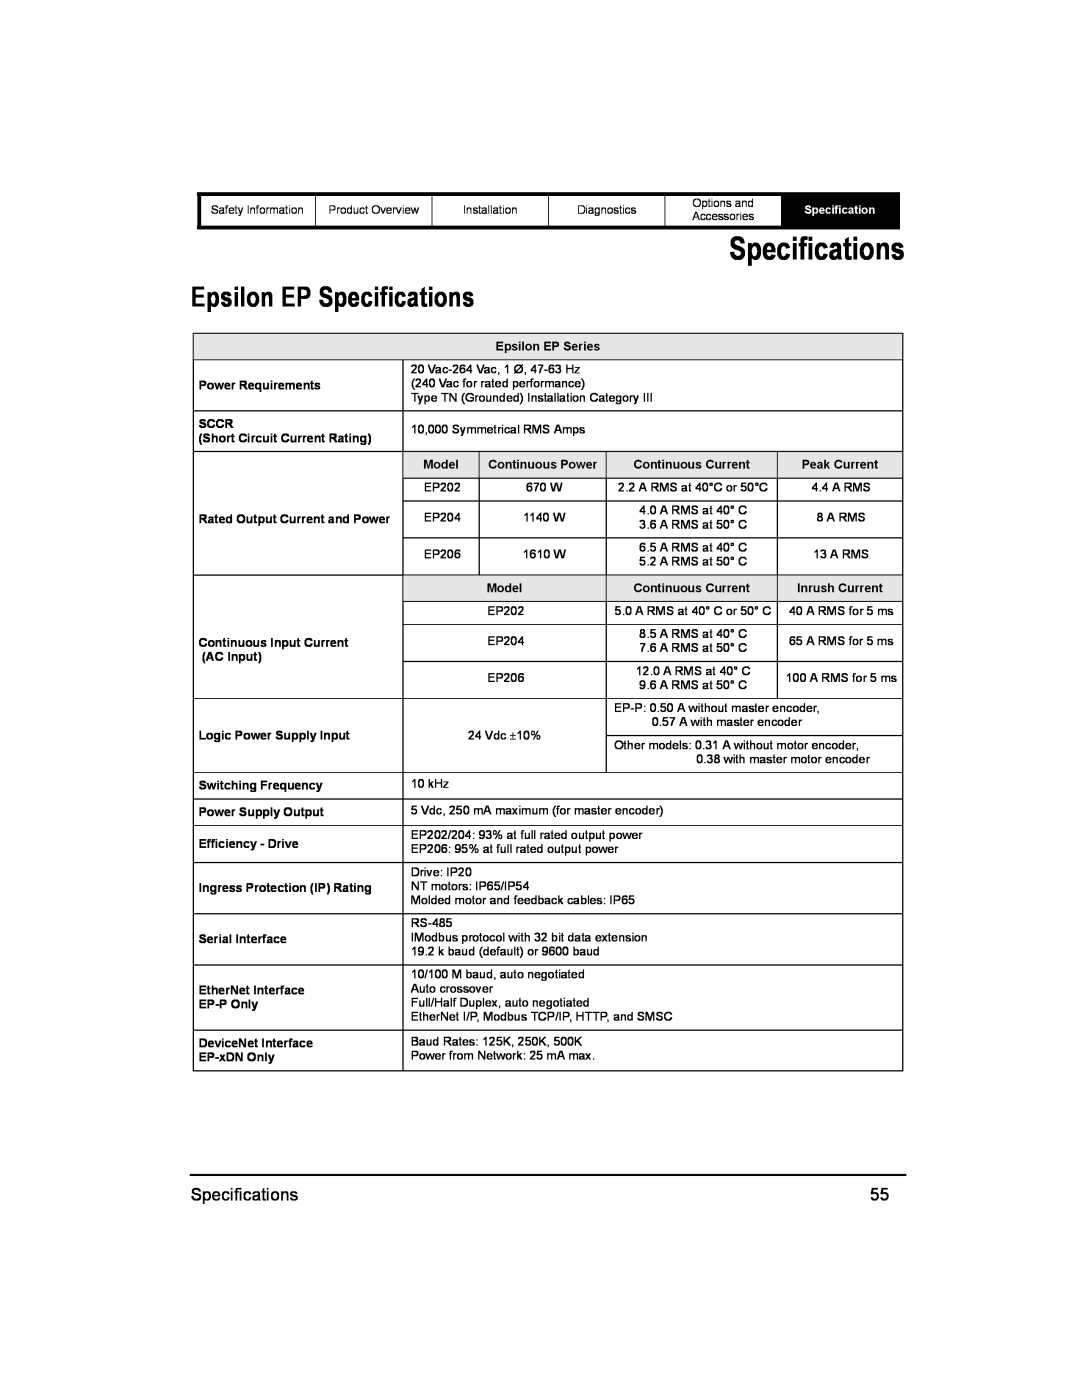 Emerson 400518-01 installation manual Epsilon EP Specifications 